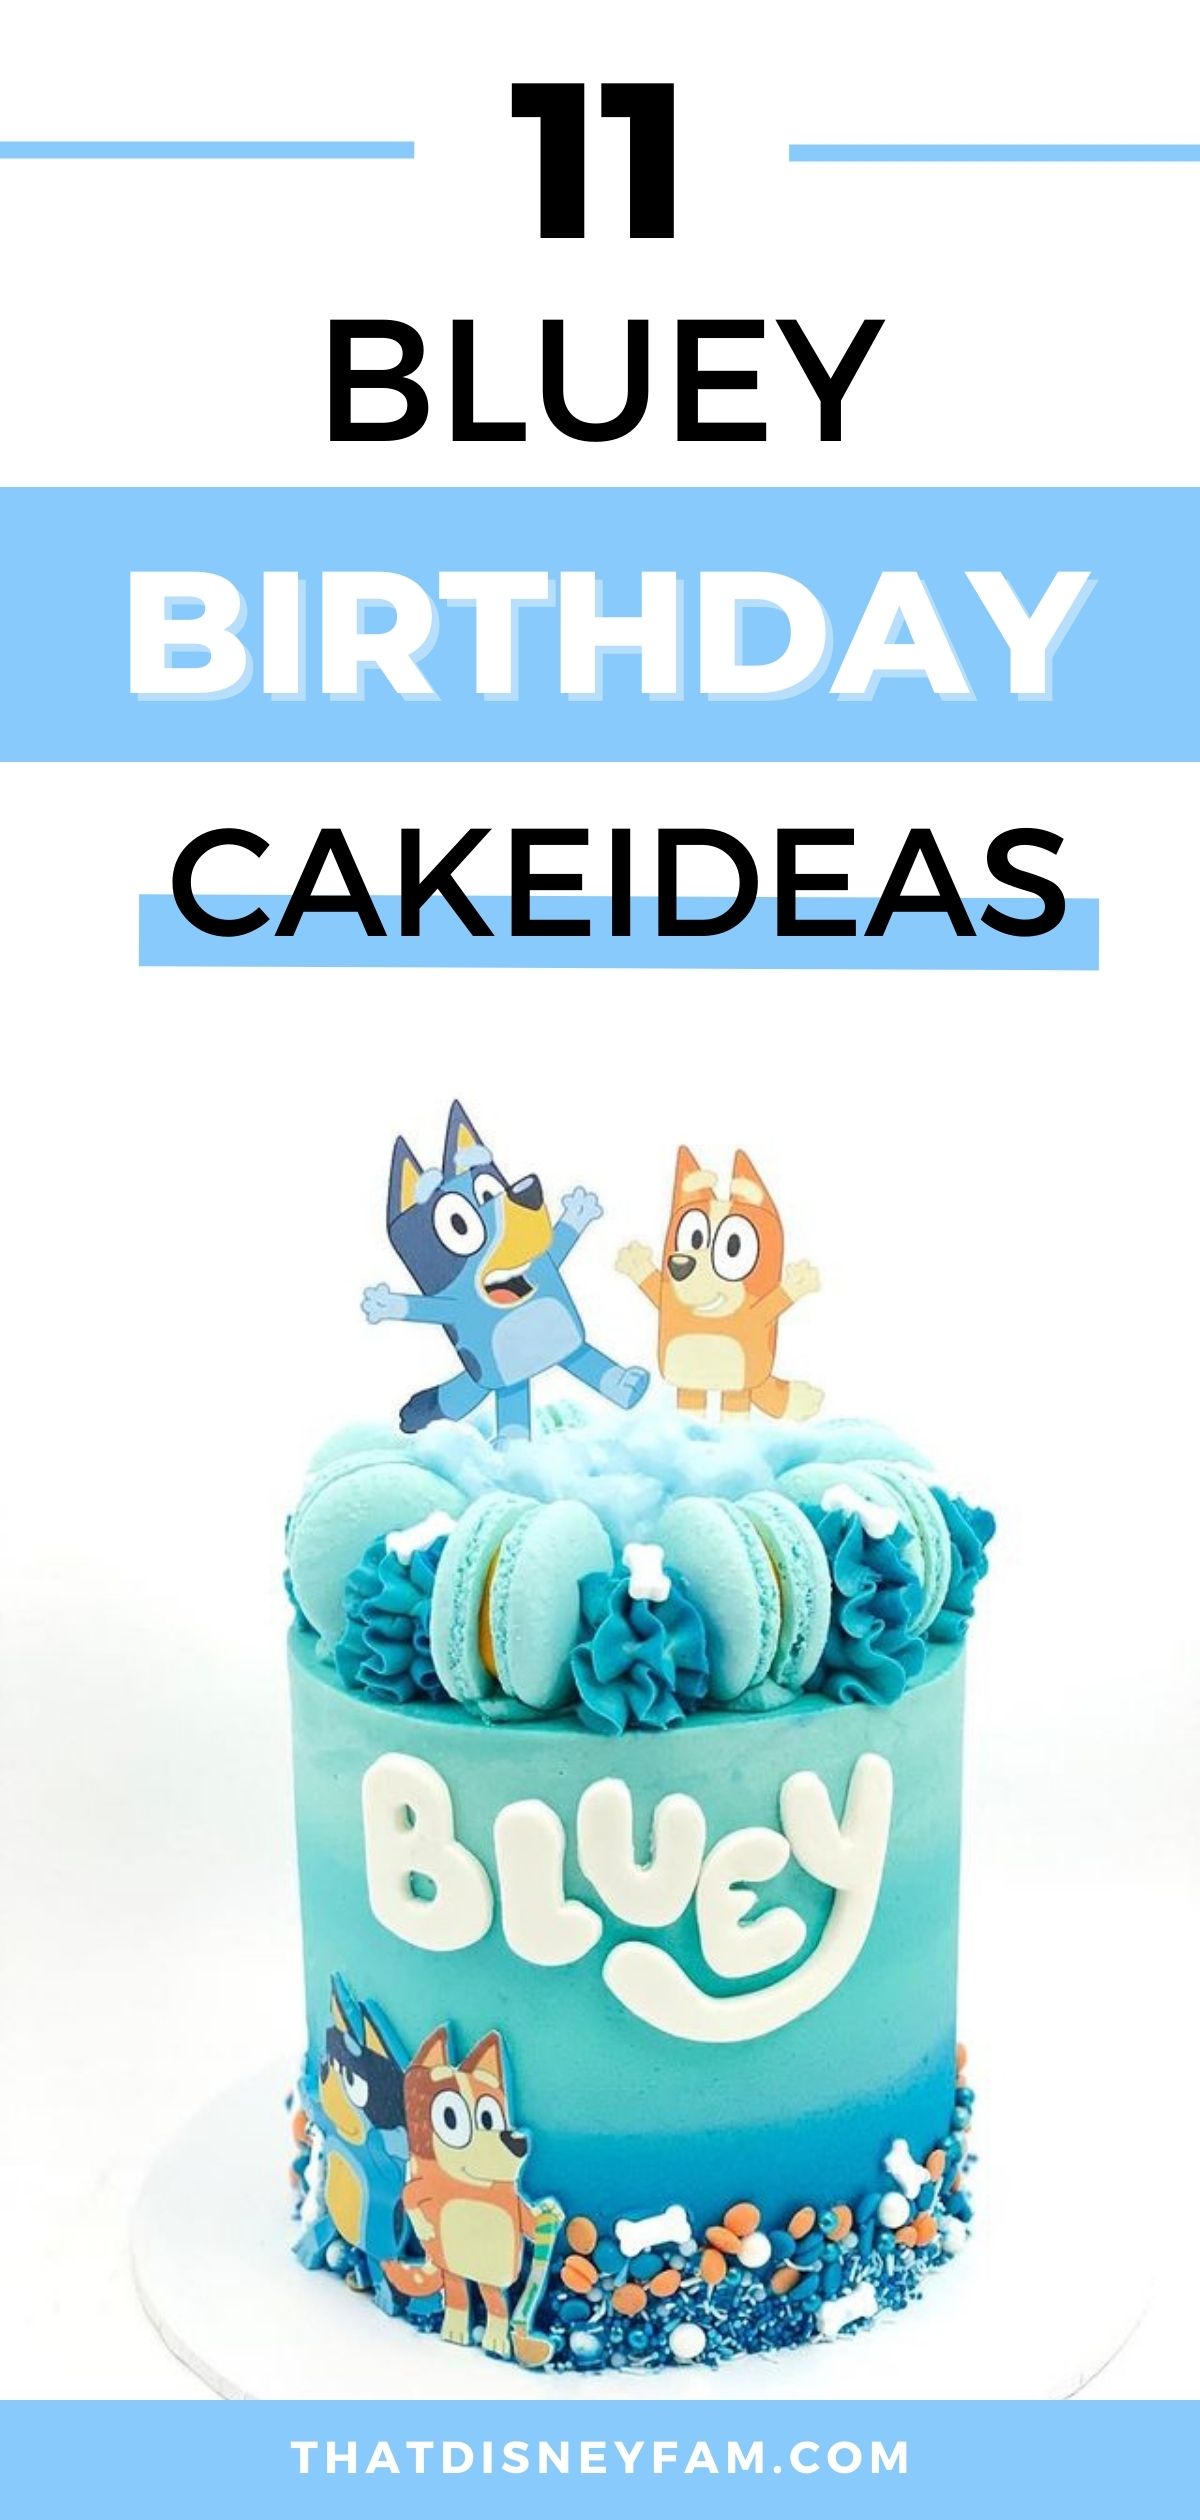 bluey birthday cake ideas